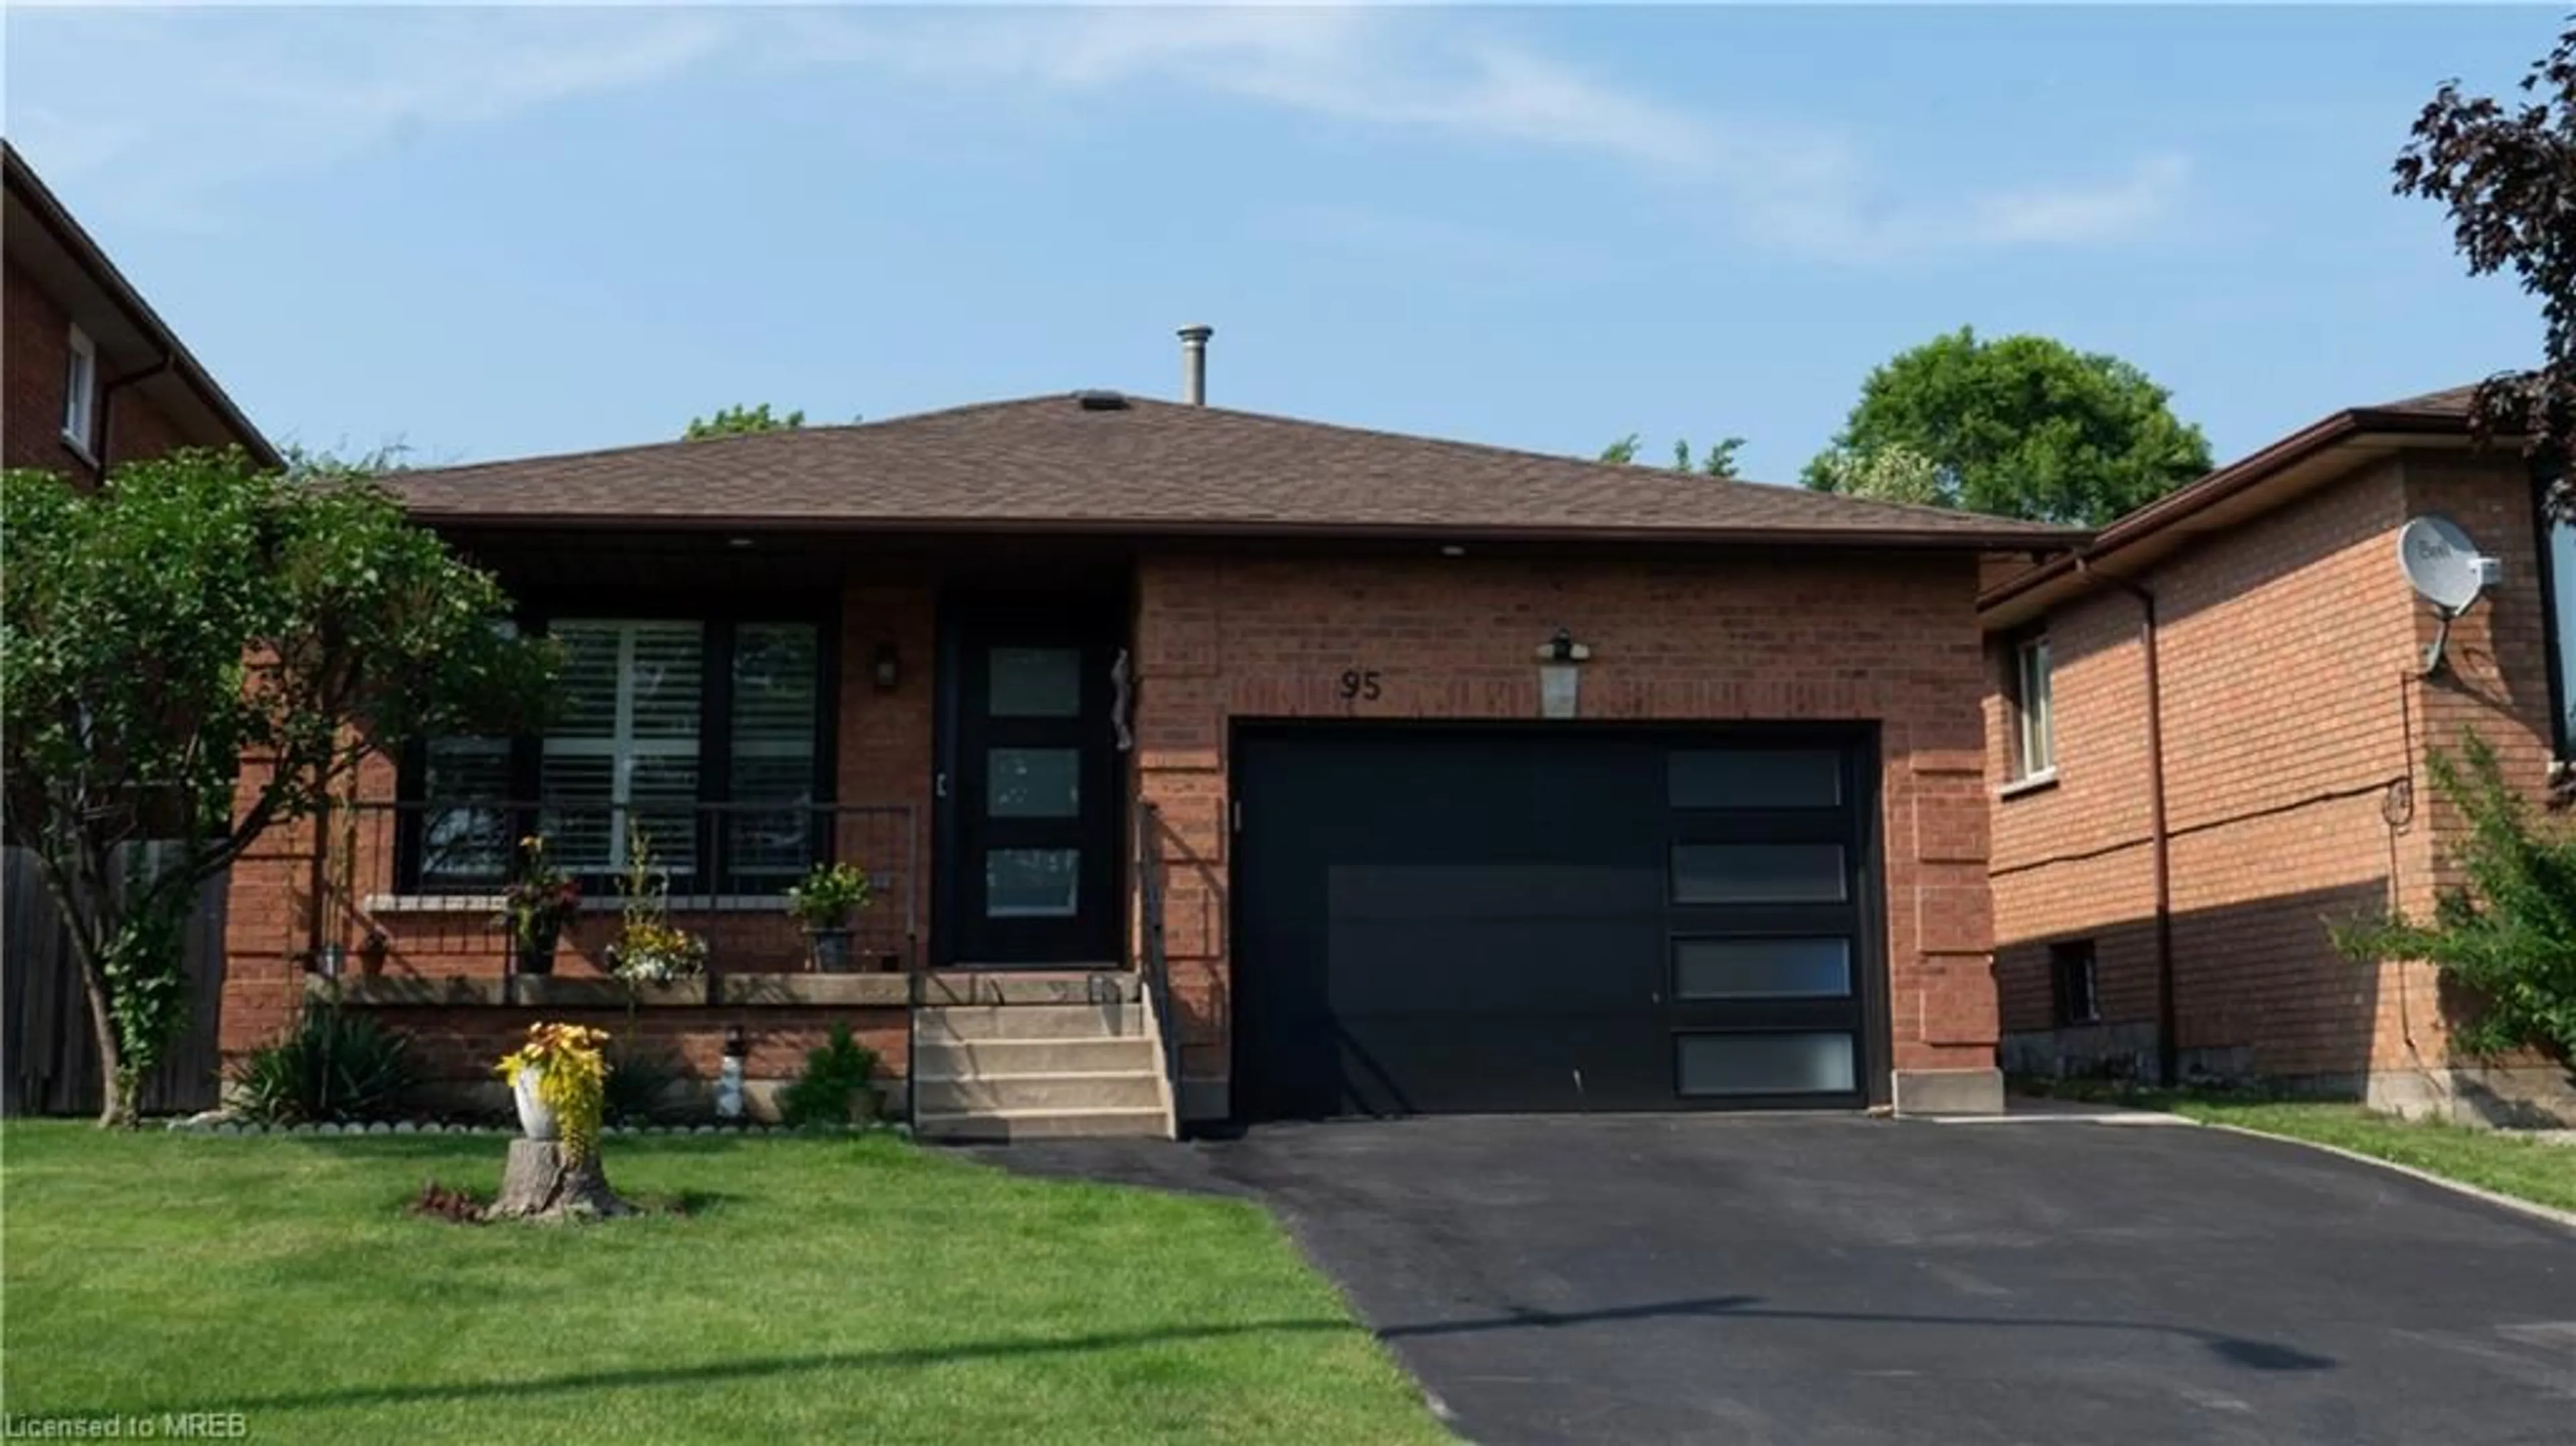 Home with brick exterior material for 95 Legget Dr, Hamilton Ontario L8W 2A5